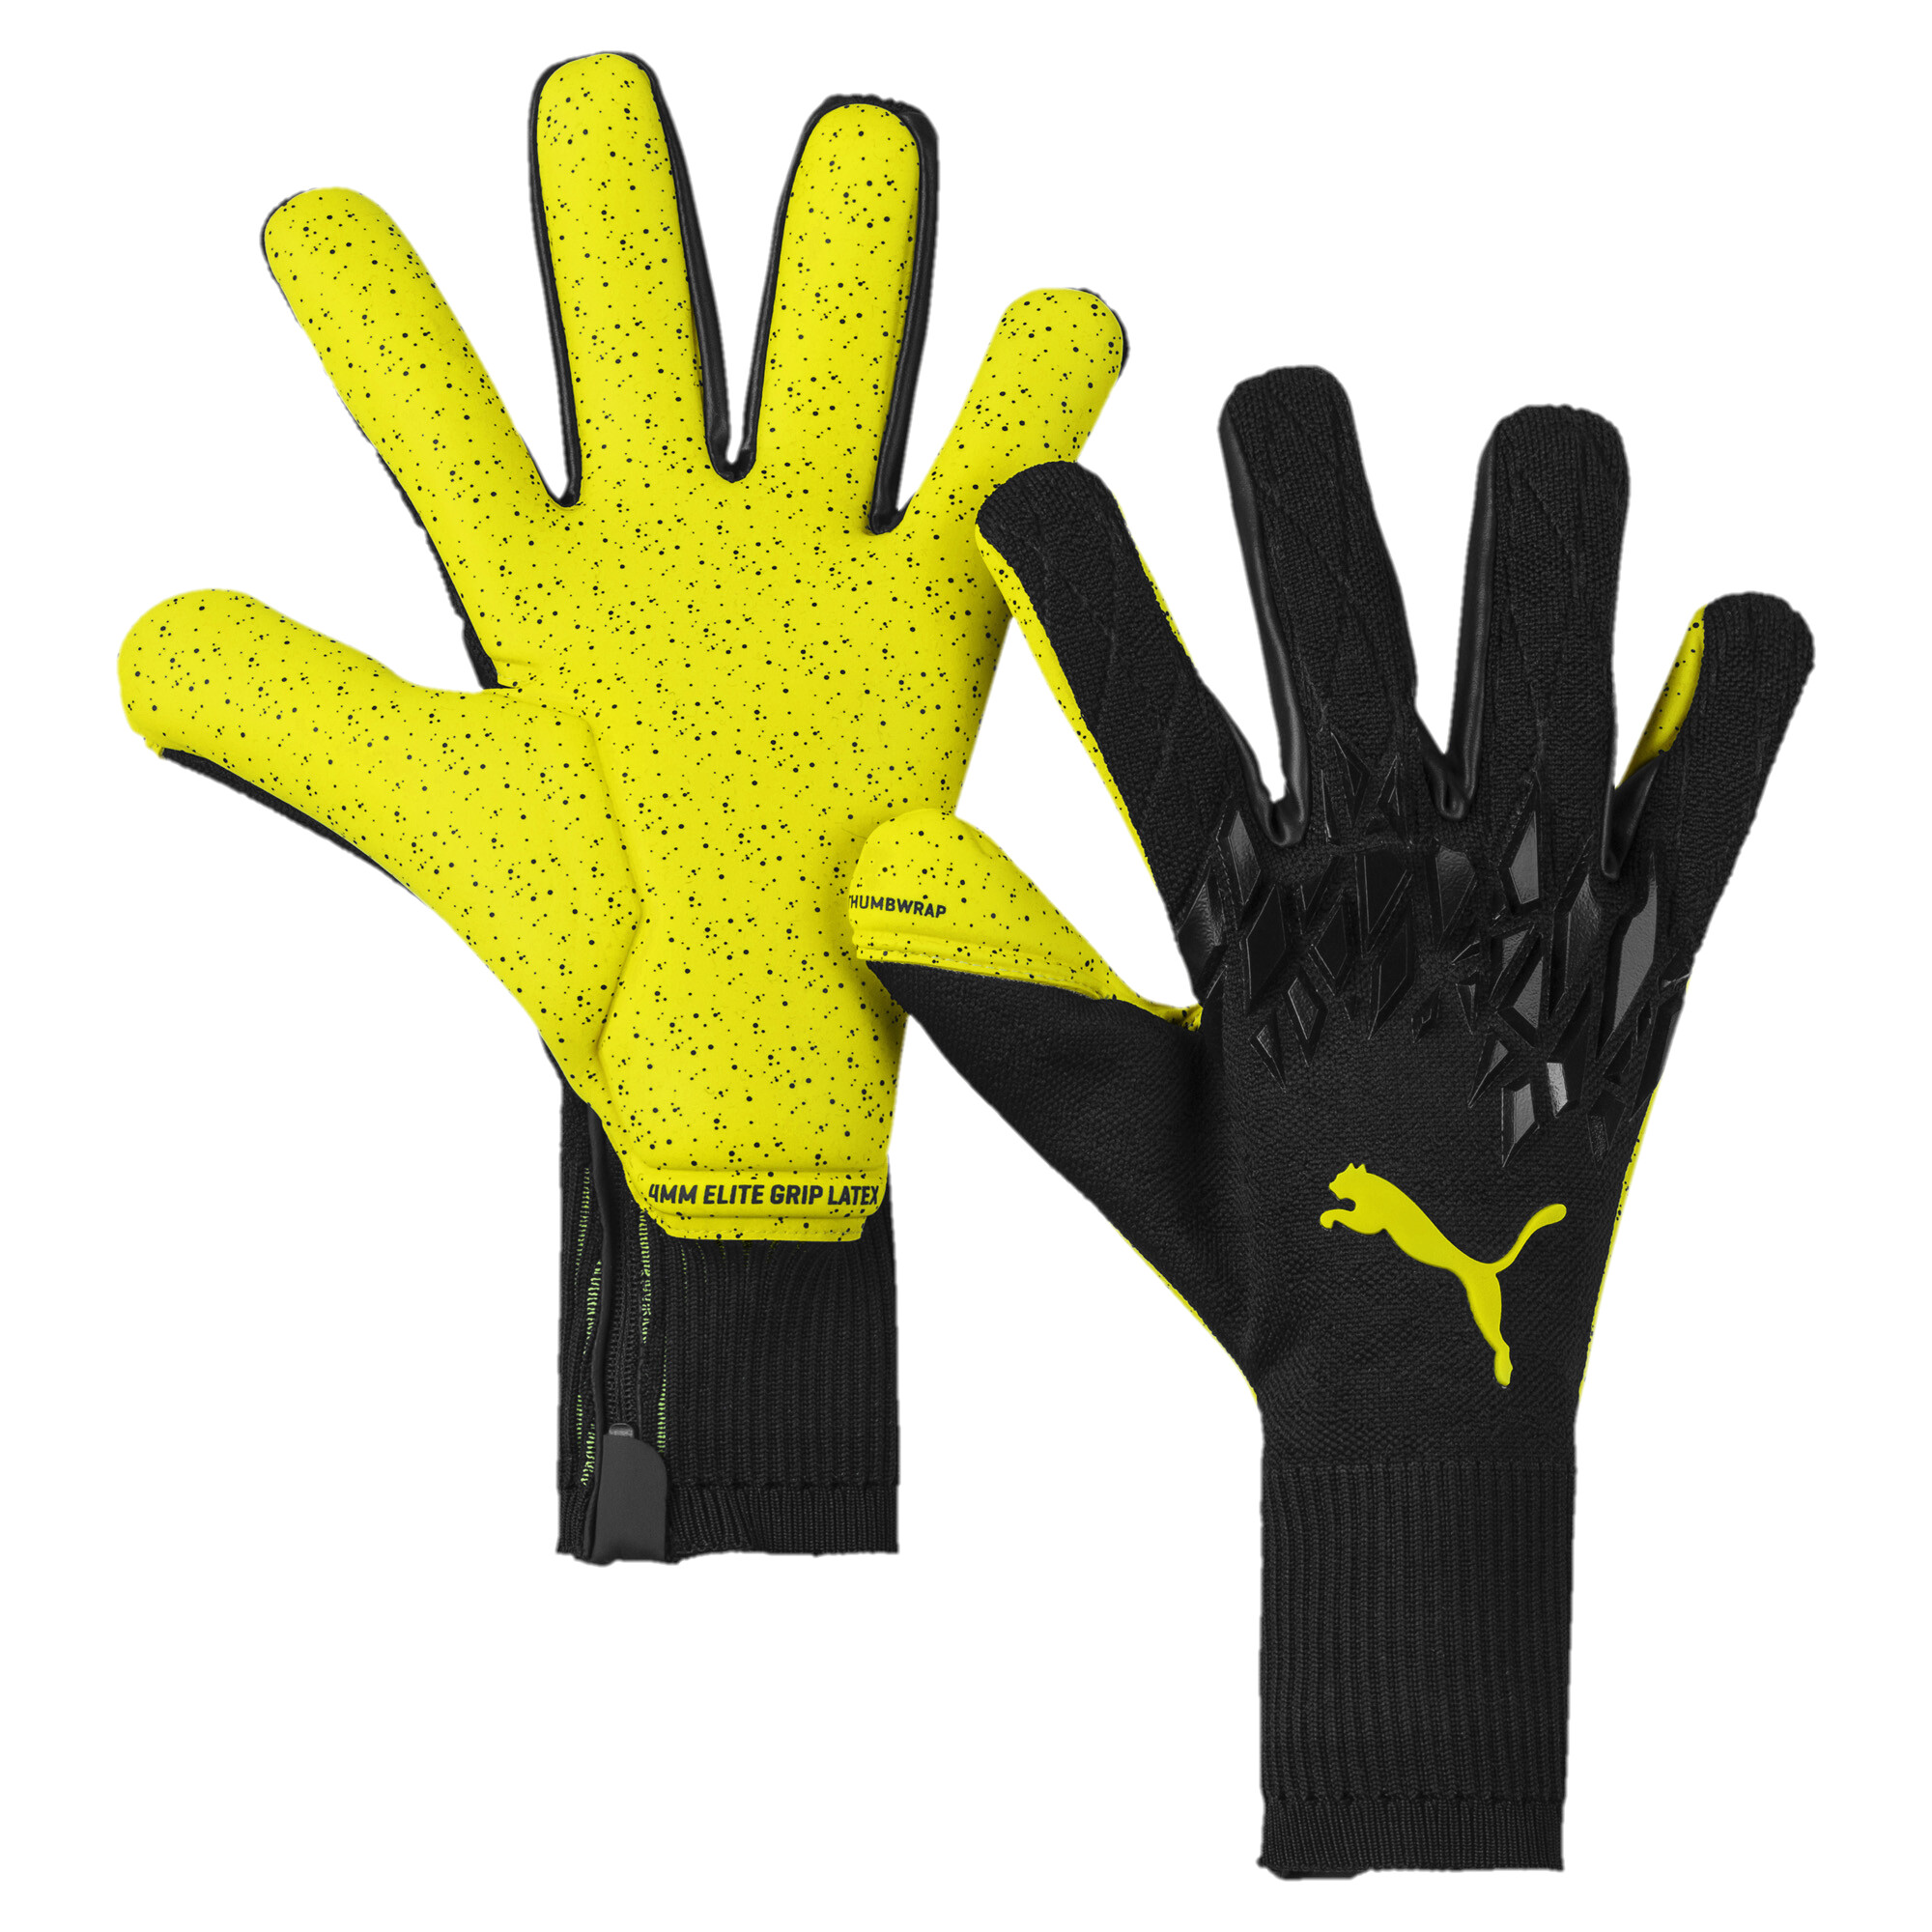 Puma FUTURE Grip 19.1 Football Goalkeeper Gloves, Black, Size 9, Accessories